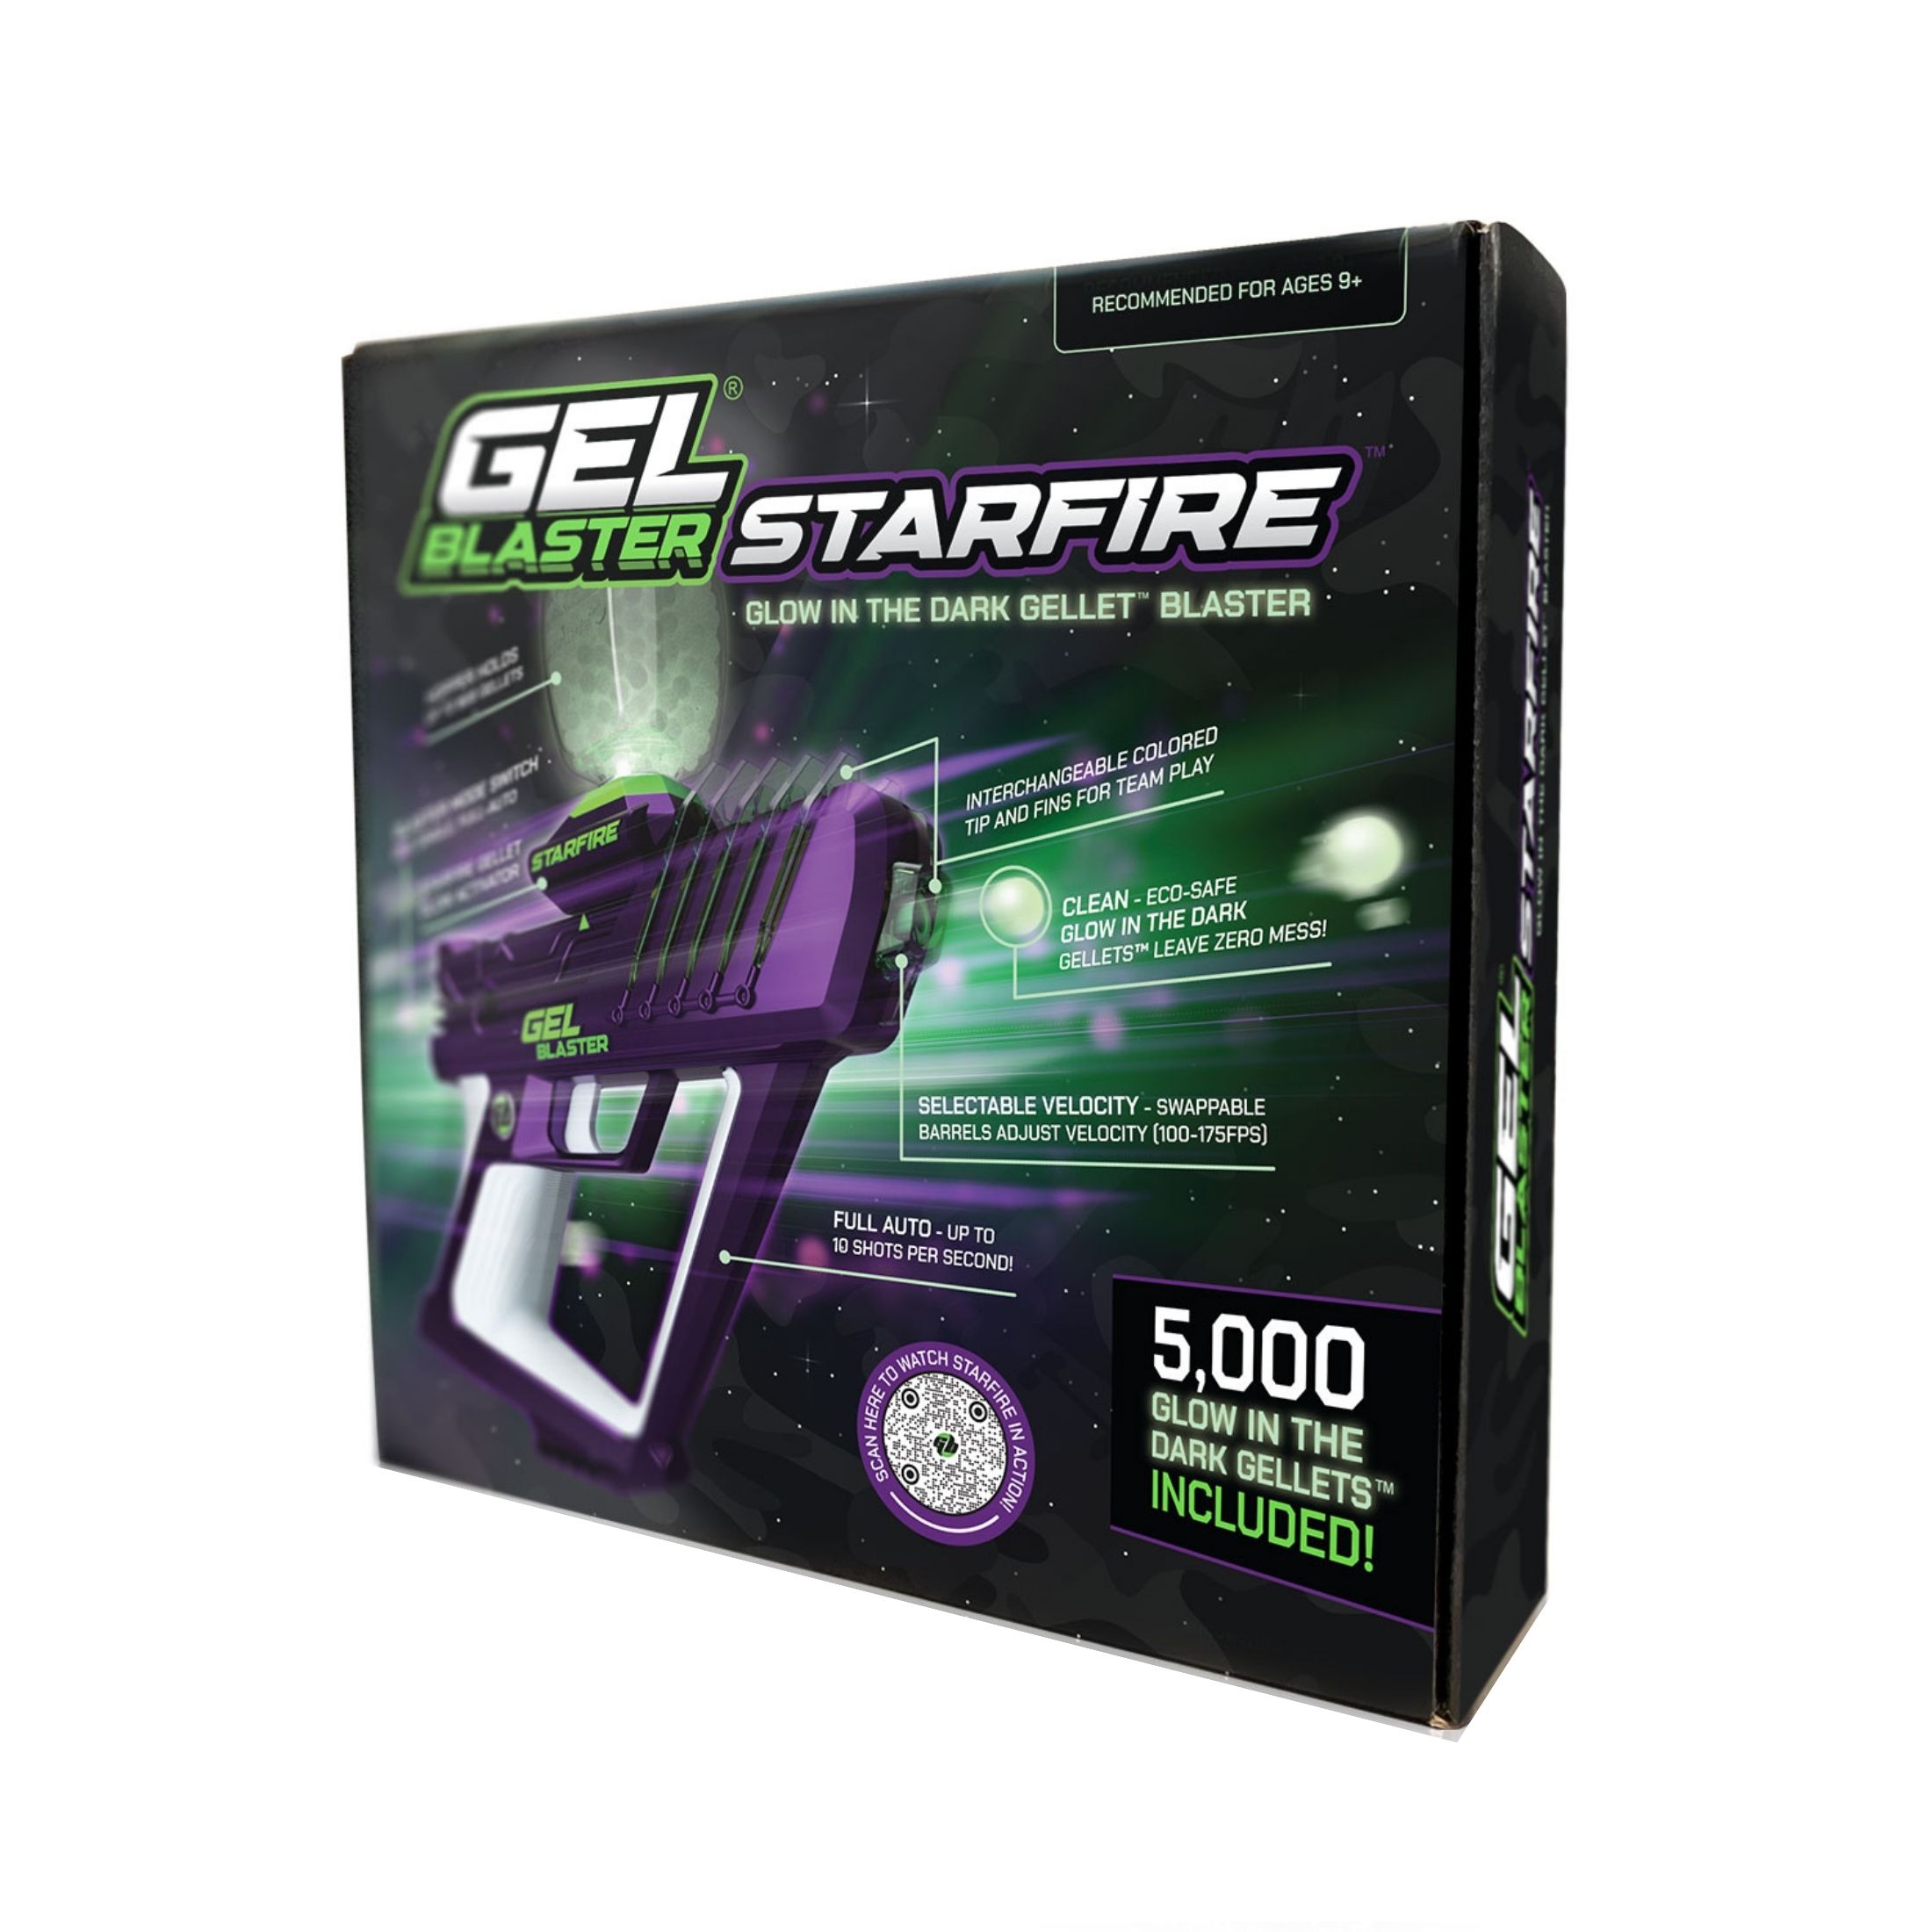 Gel Blaster Starfire, Glow-in-the-Dark Gellet Blaster, with 5,000 Starfire Glow-in-the-Dark Gellets - image 5 of 12